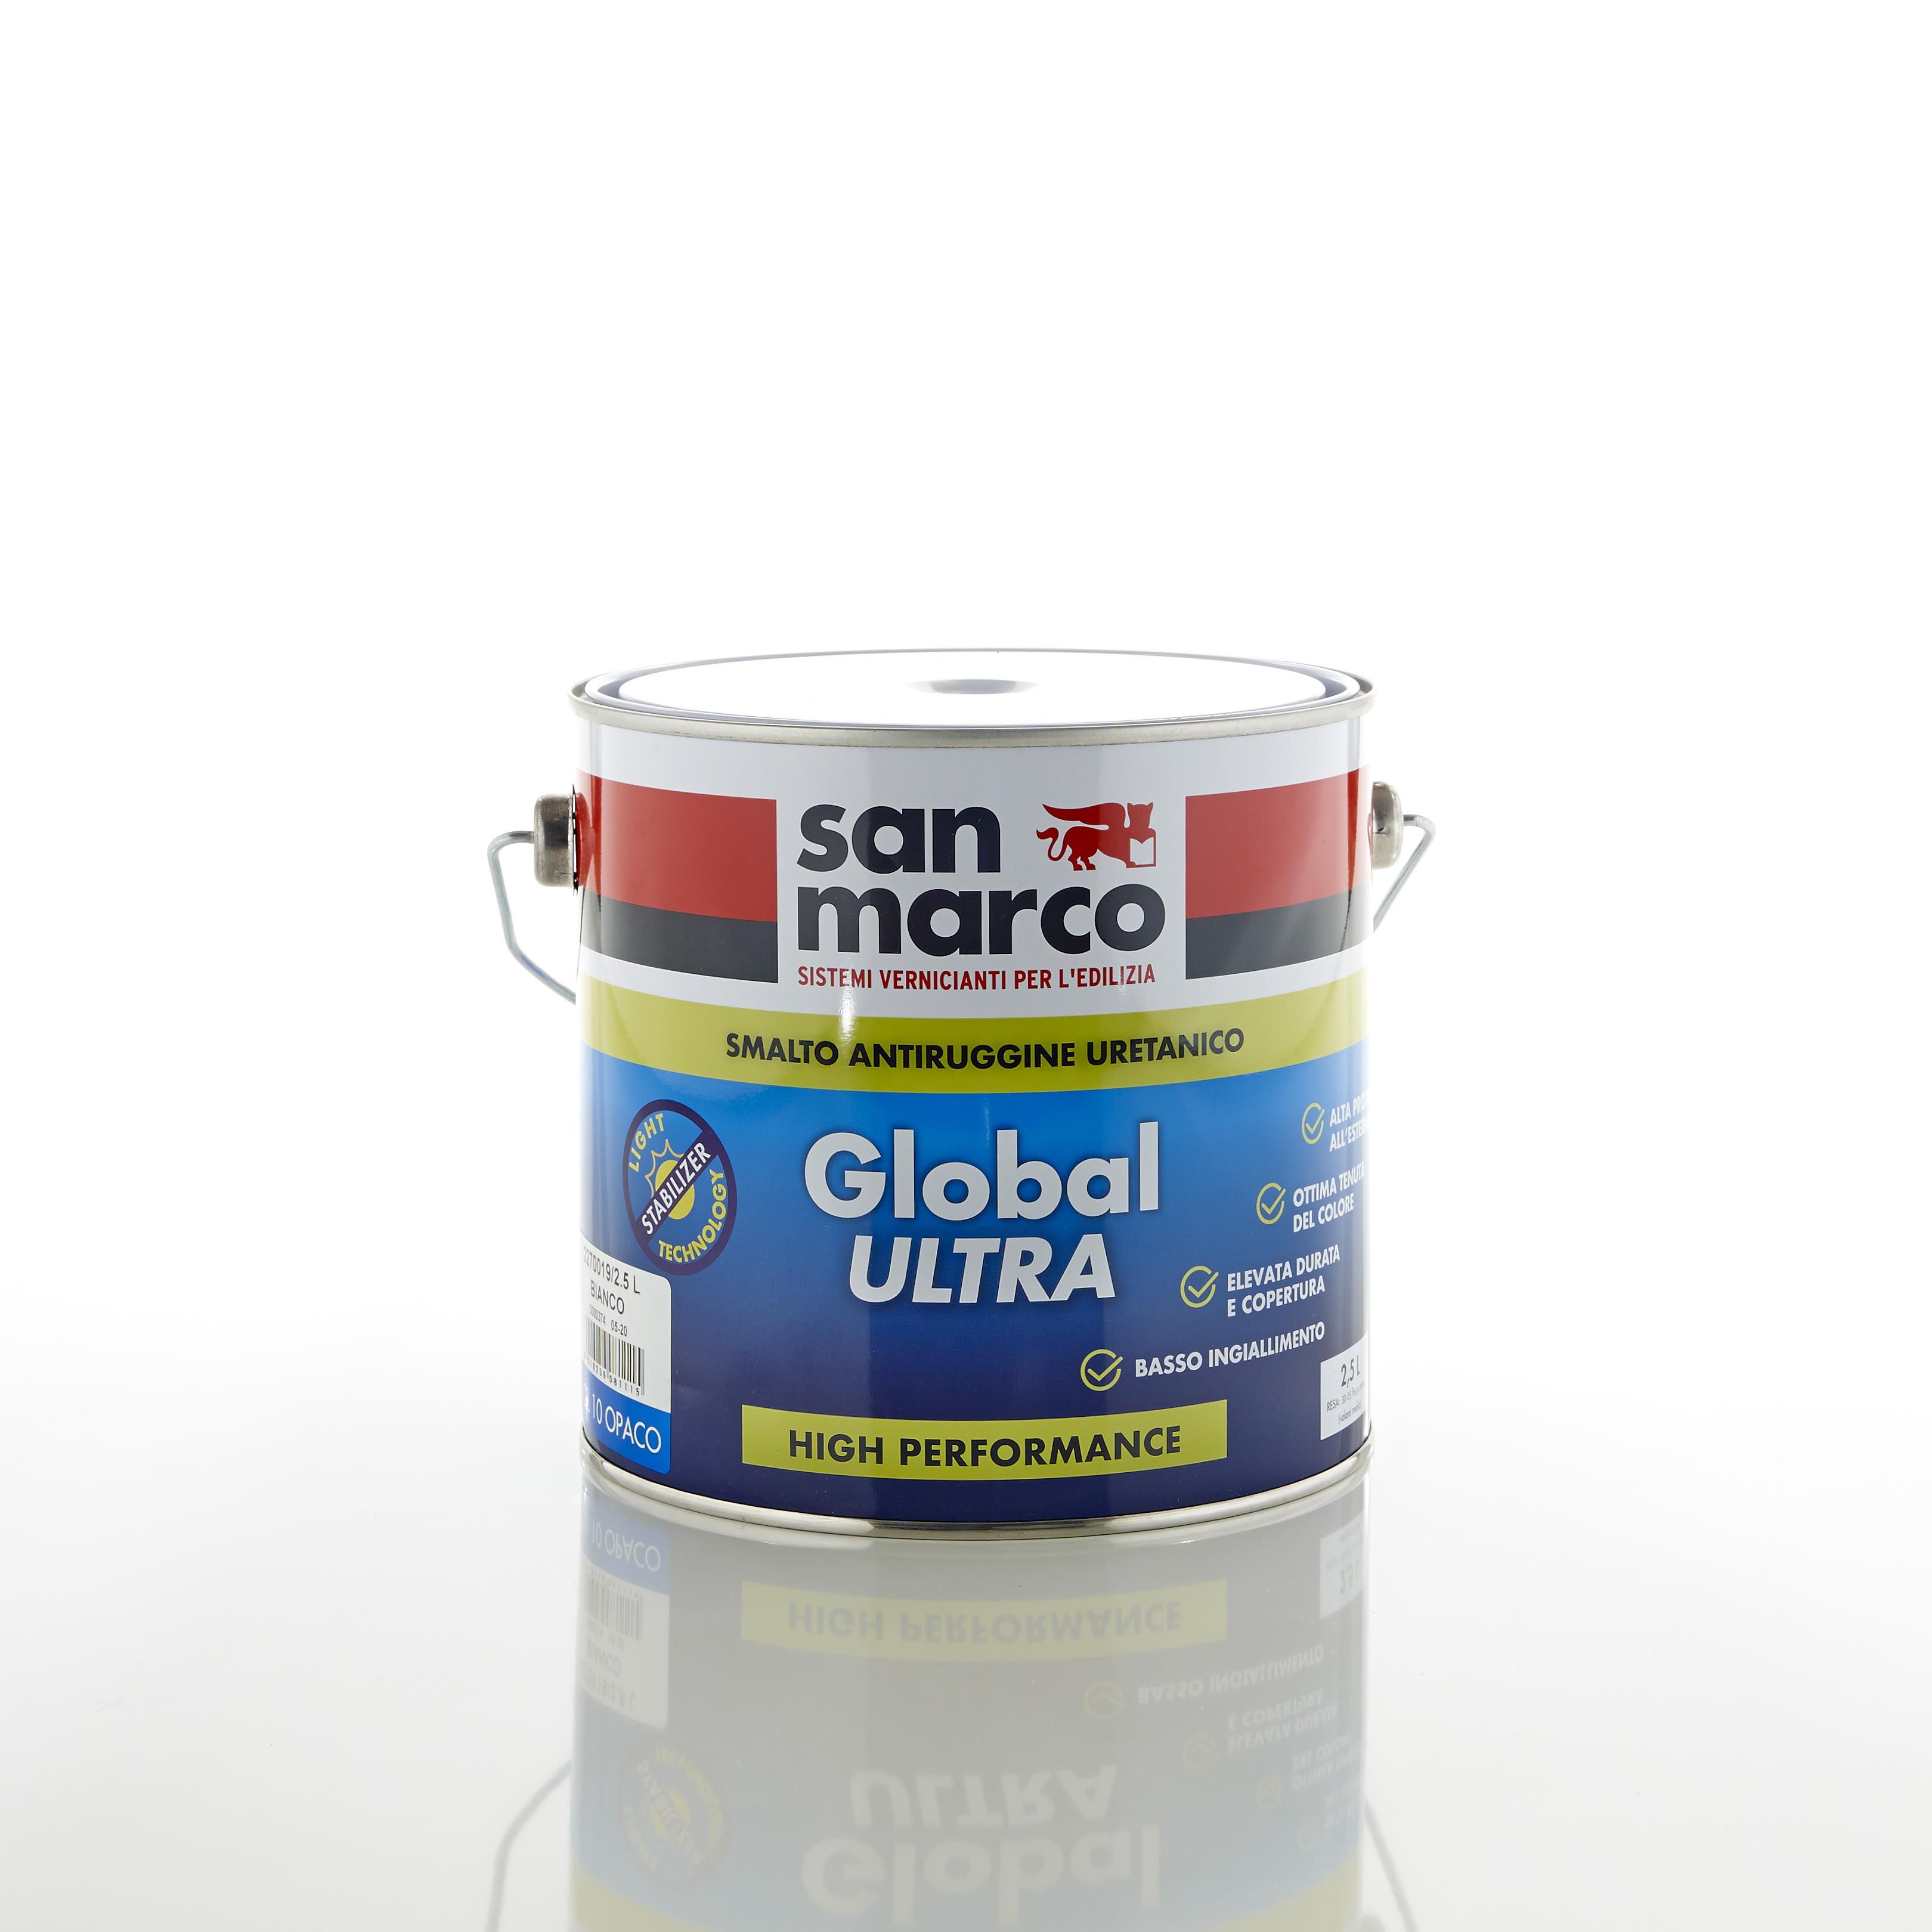 Global ultra gl 10 opaco - peinture antirouille - san marco - opaque_0